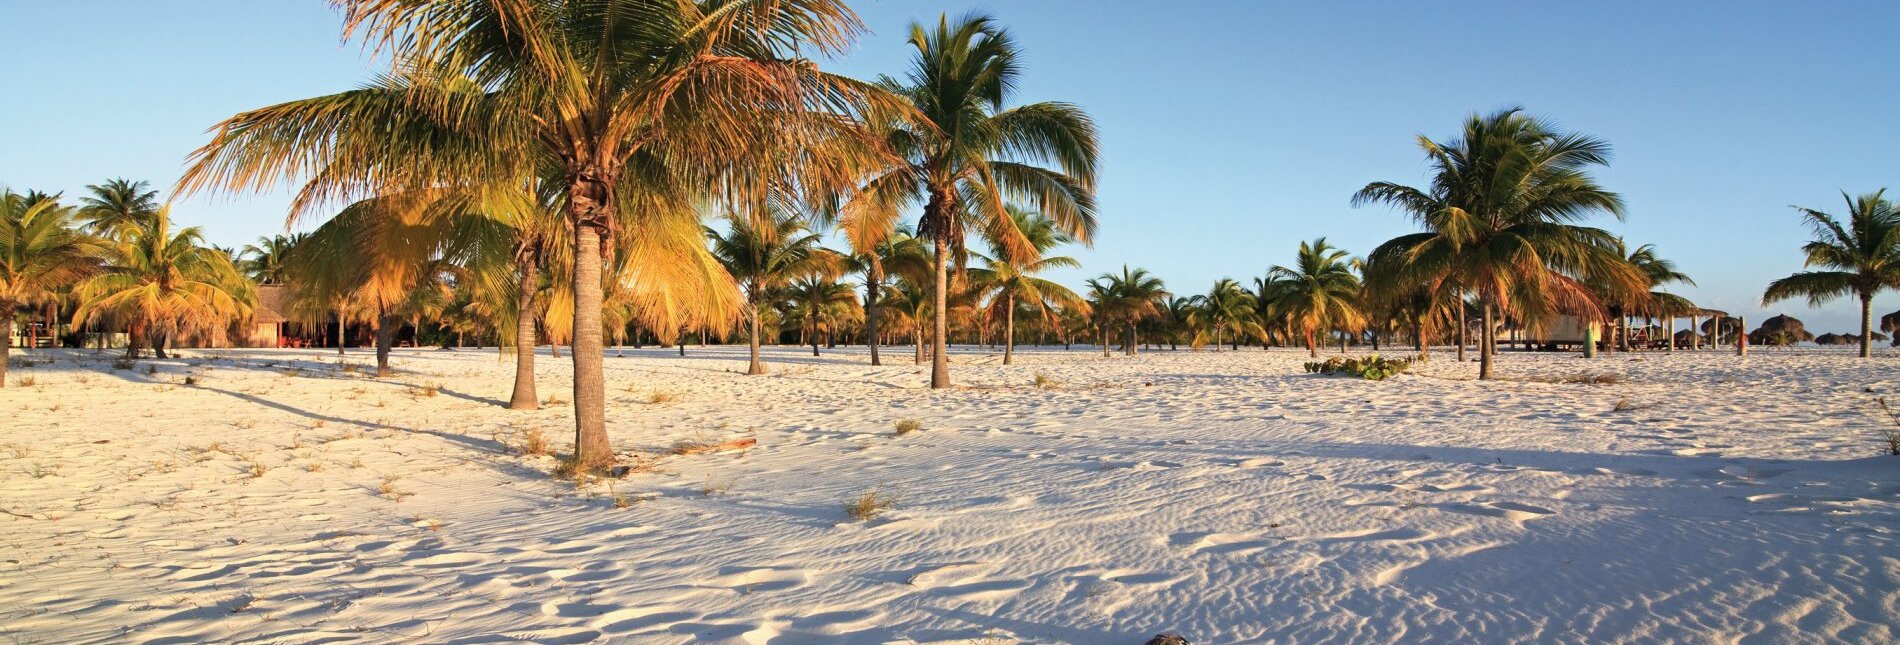 Palmen an der Playa Sirena